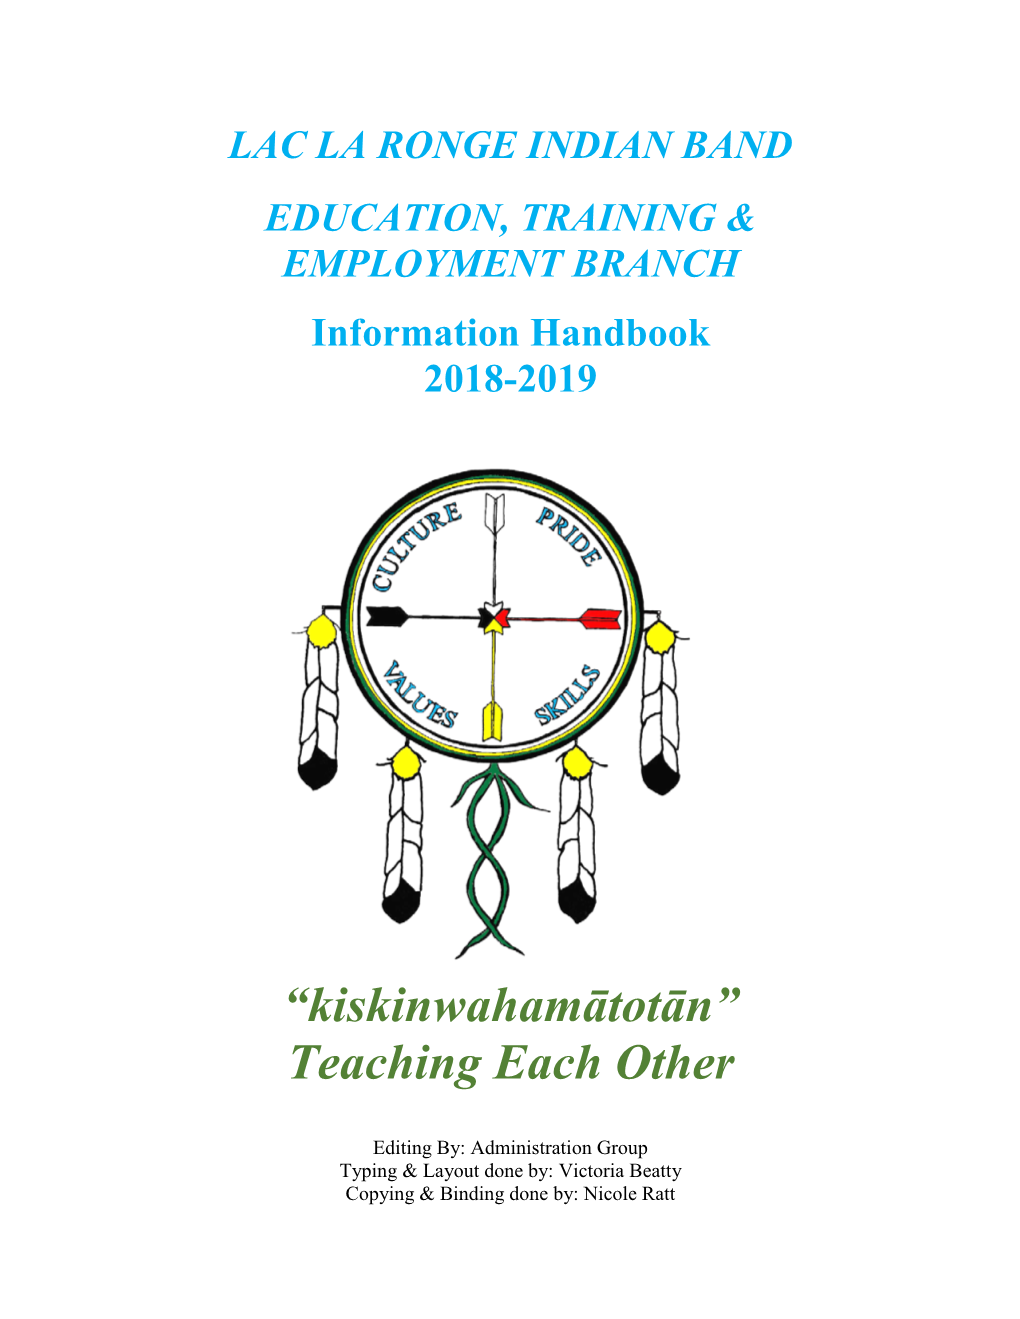 Kiskinwahamātotān” Teaching Each Other